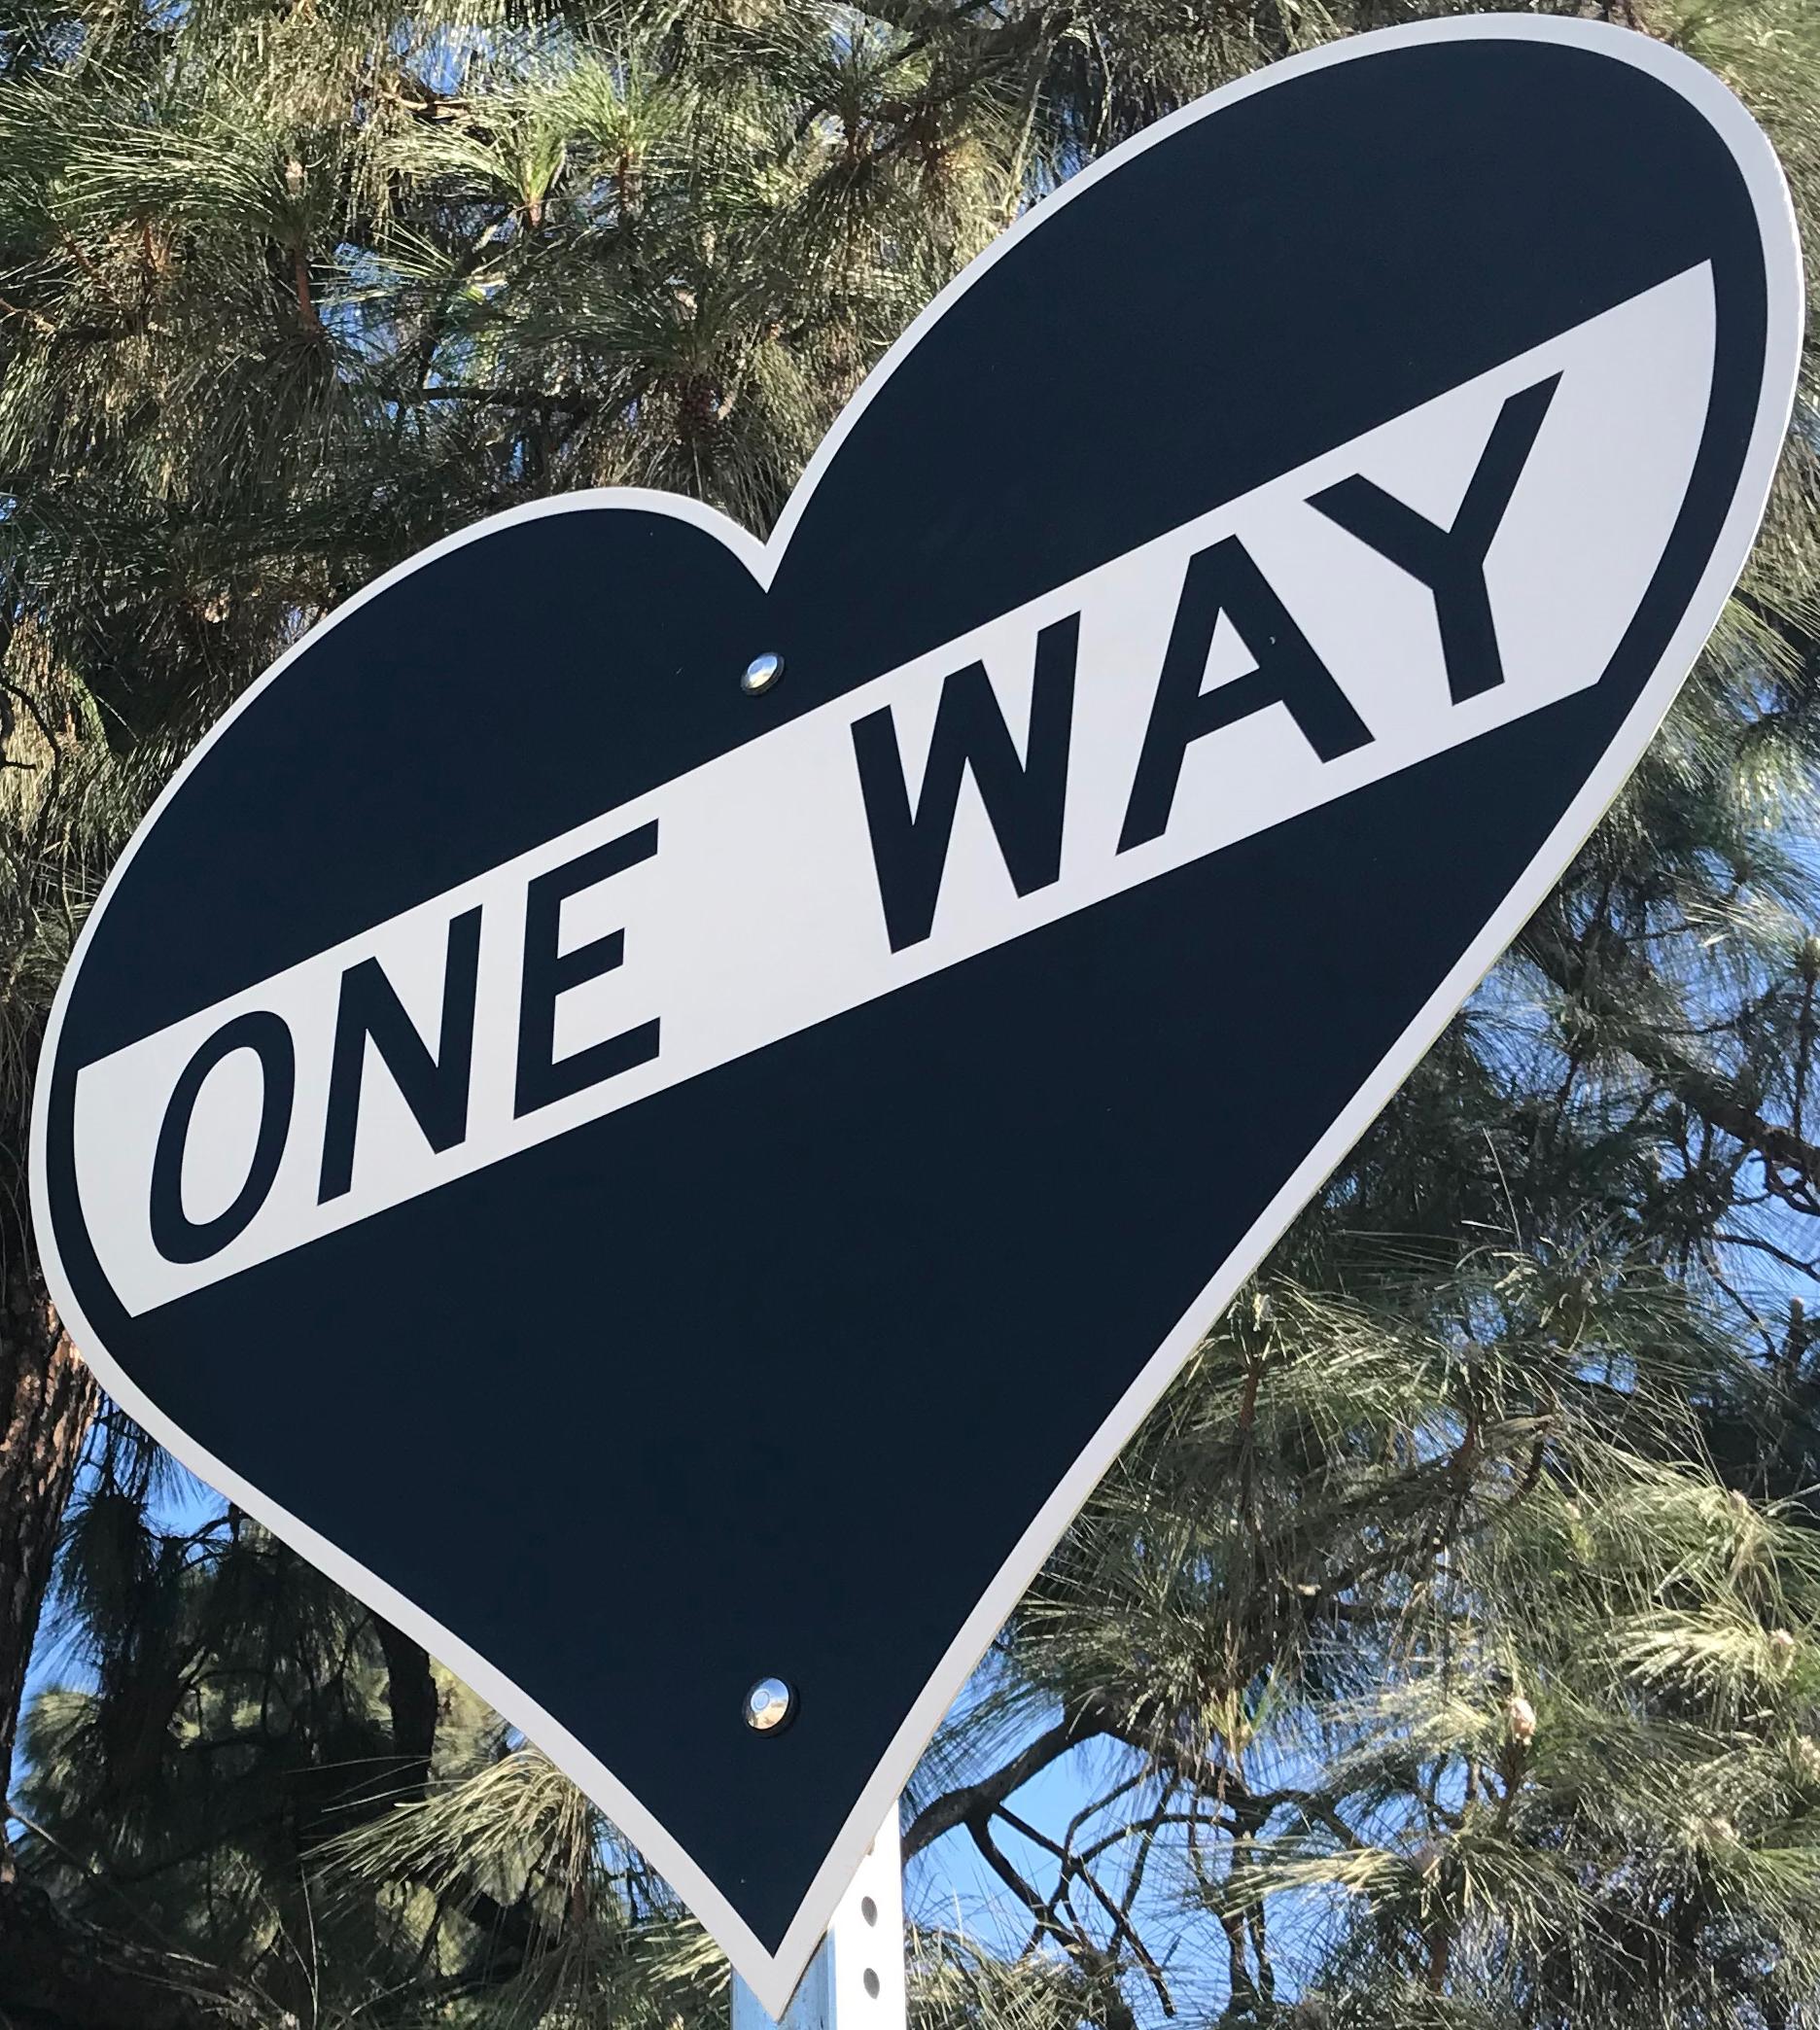 « One Way - Heart » (un chemin - un cœur)  - Sculpture d'enseigne de rue contemporaine - Mixed Media Art de Scott Froschauer